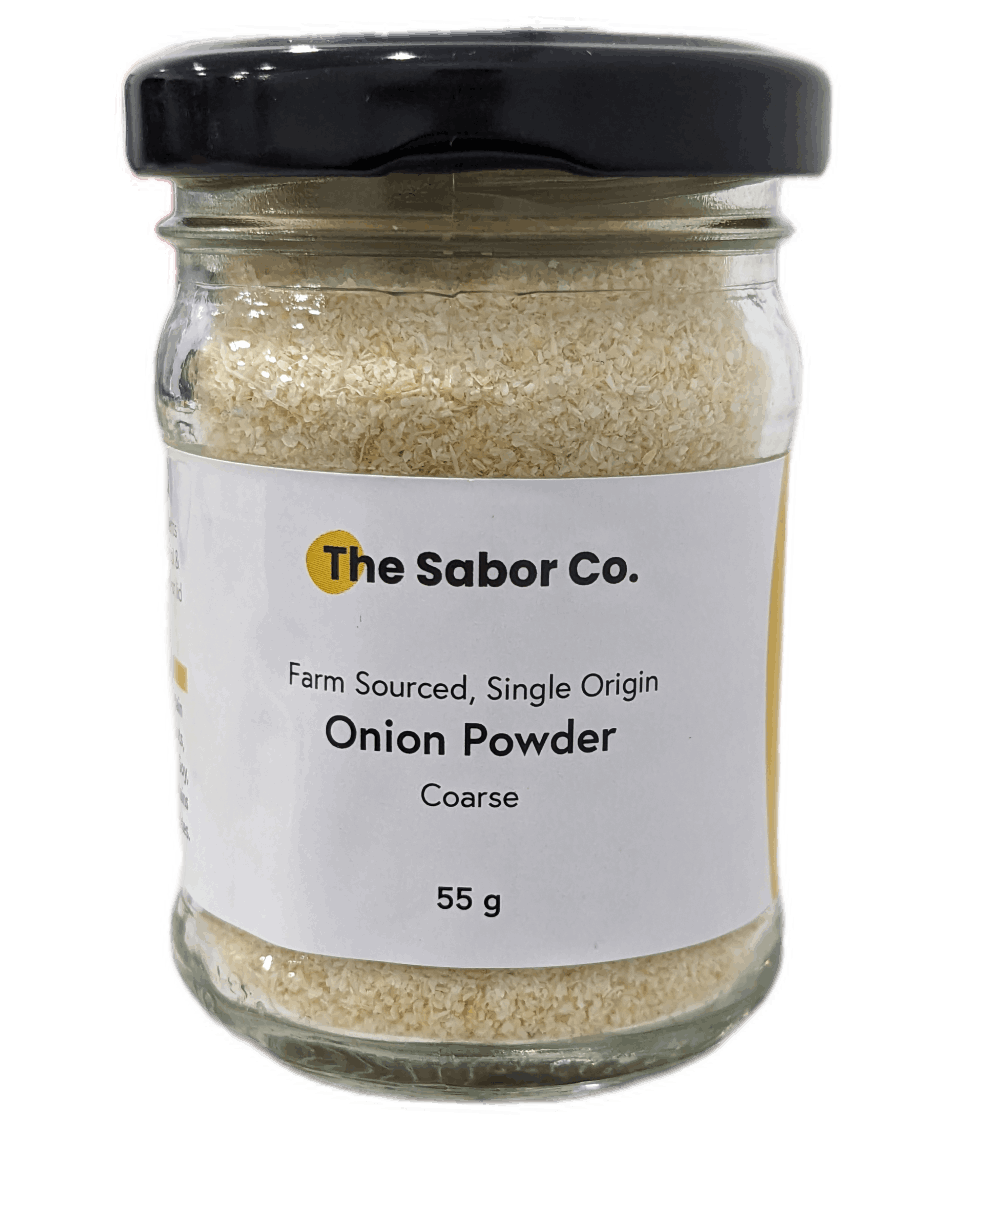 Granulated Onion Powder (Coarse)